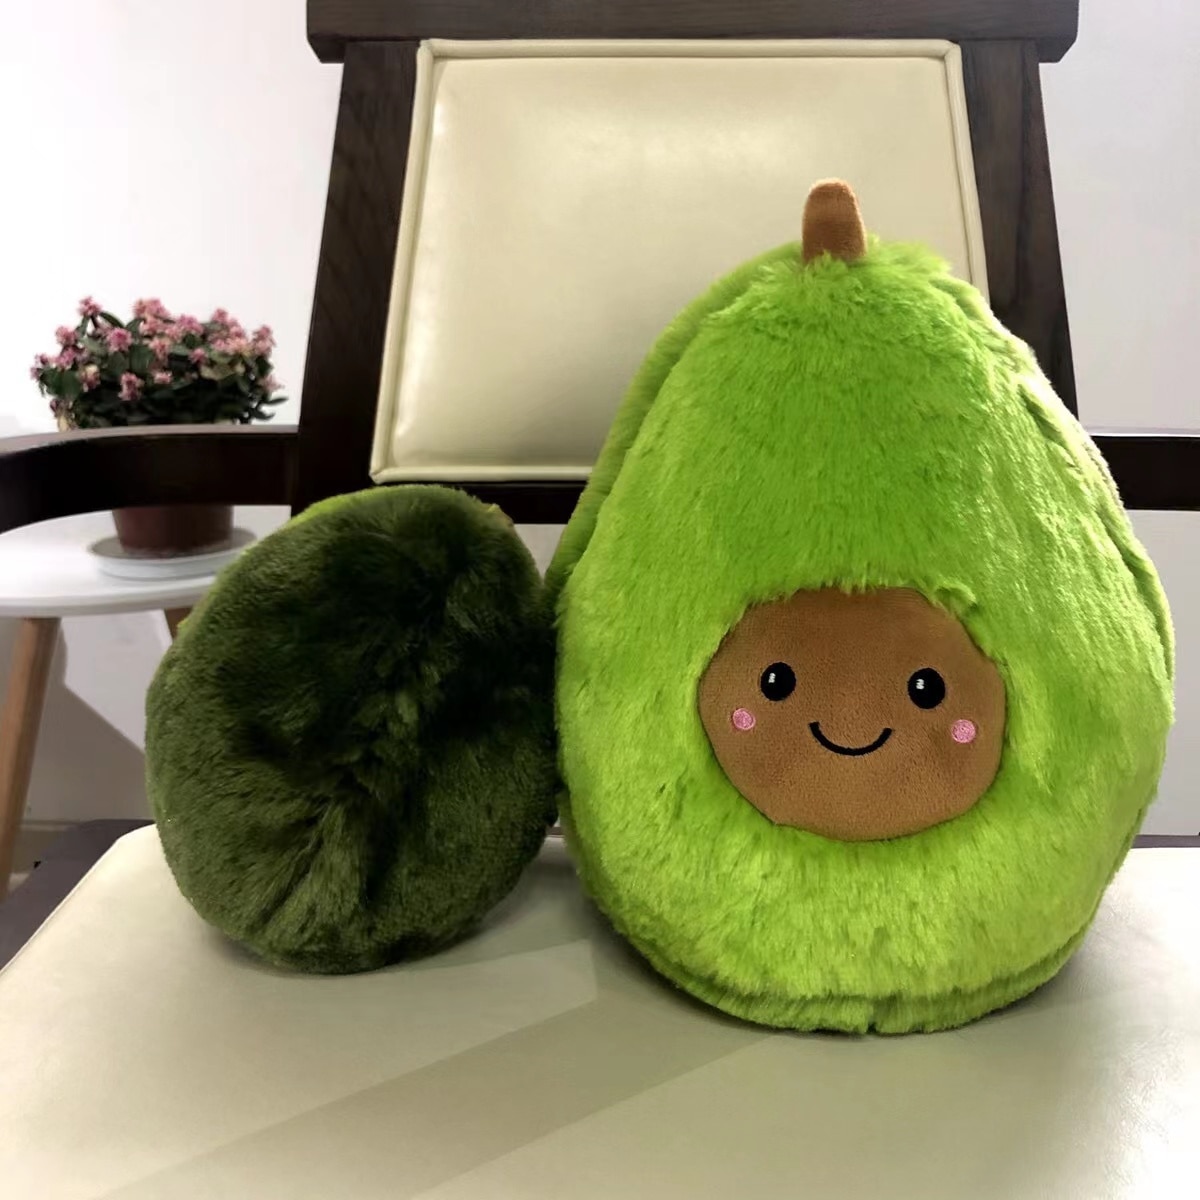 20/40/60CM smile cartoon avocado stuffed plush toy fruit plant pillow doll children gift home decoration ornaments